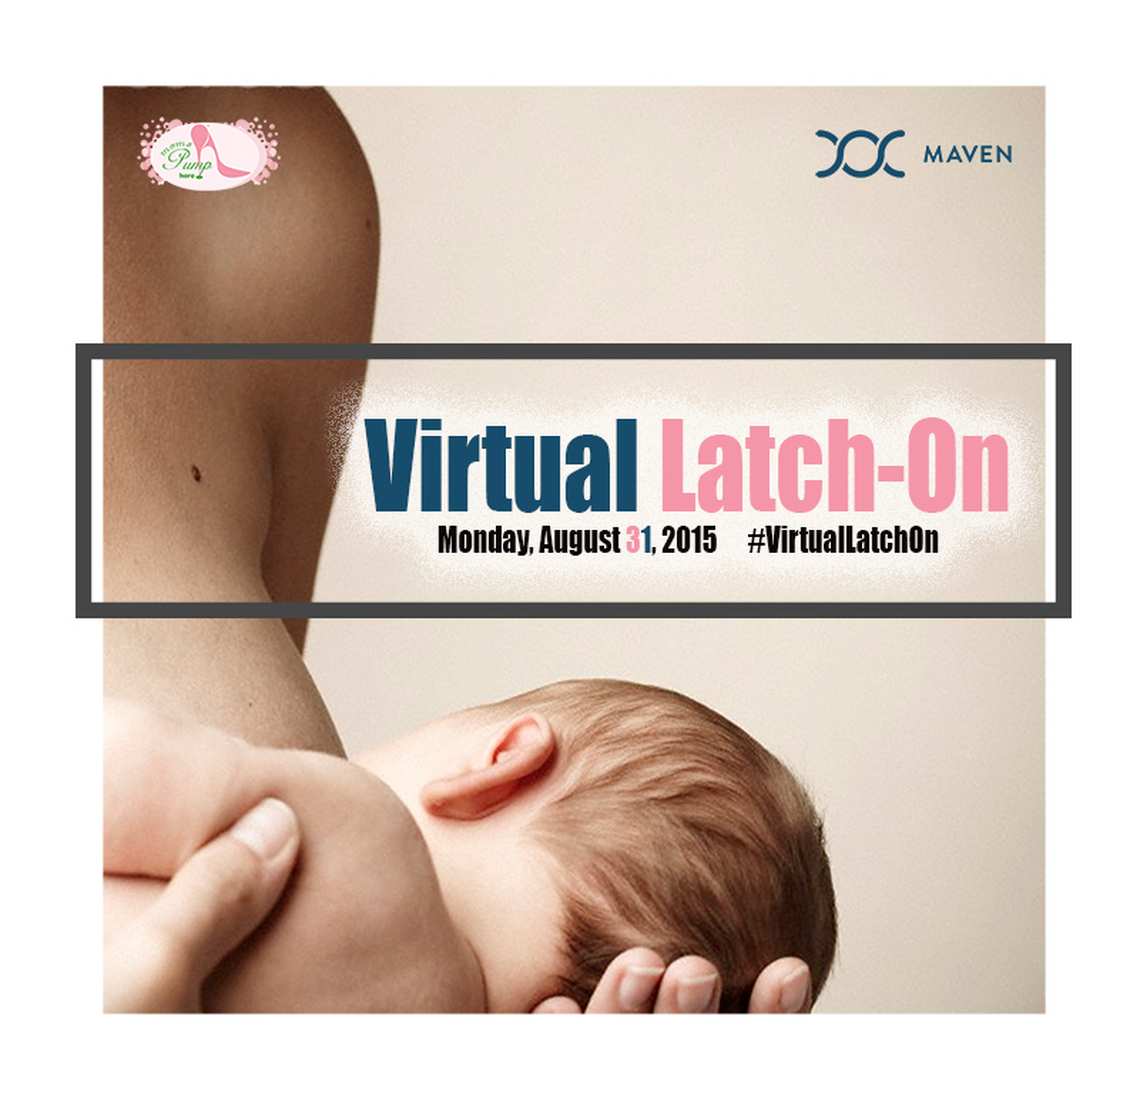 The Virtual Latch-On